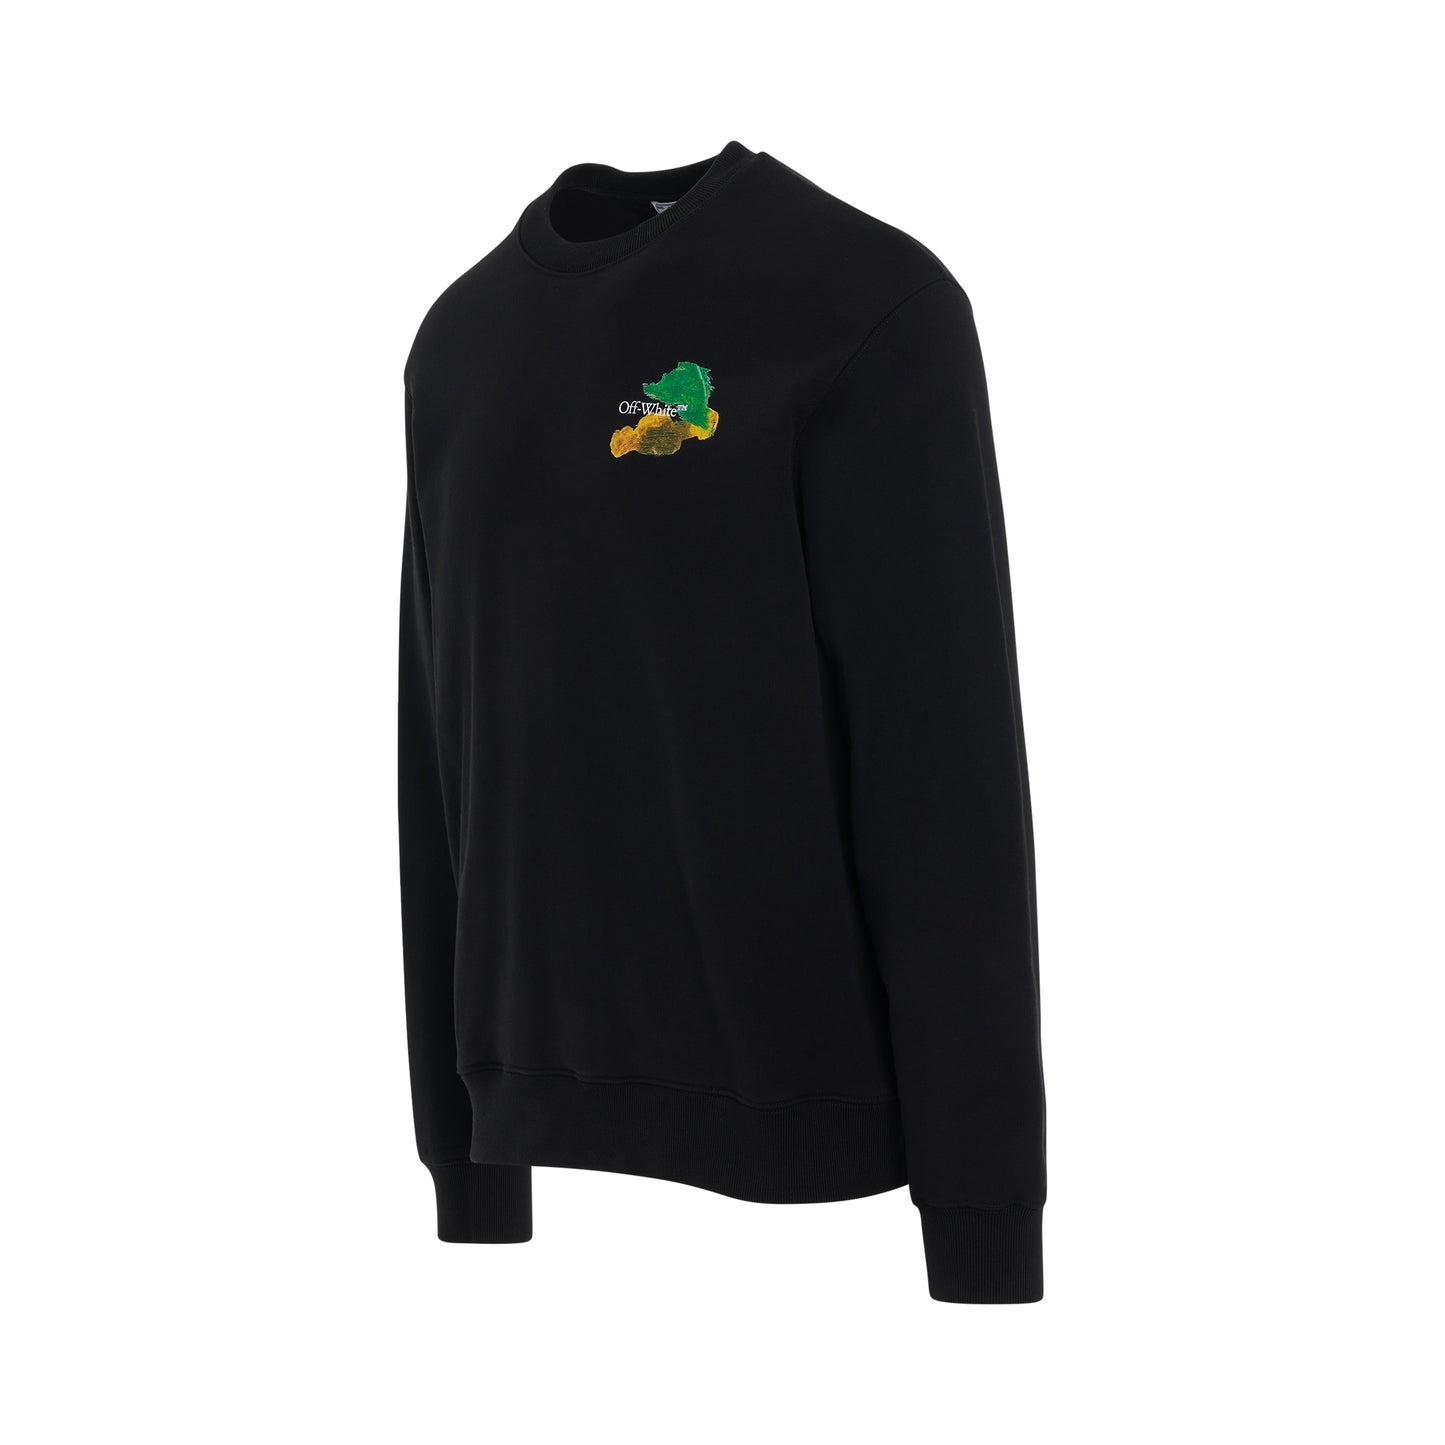 Brush Arrow Slim Crewneck Sweatshirt in Black/Multicolour